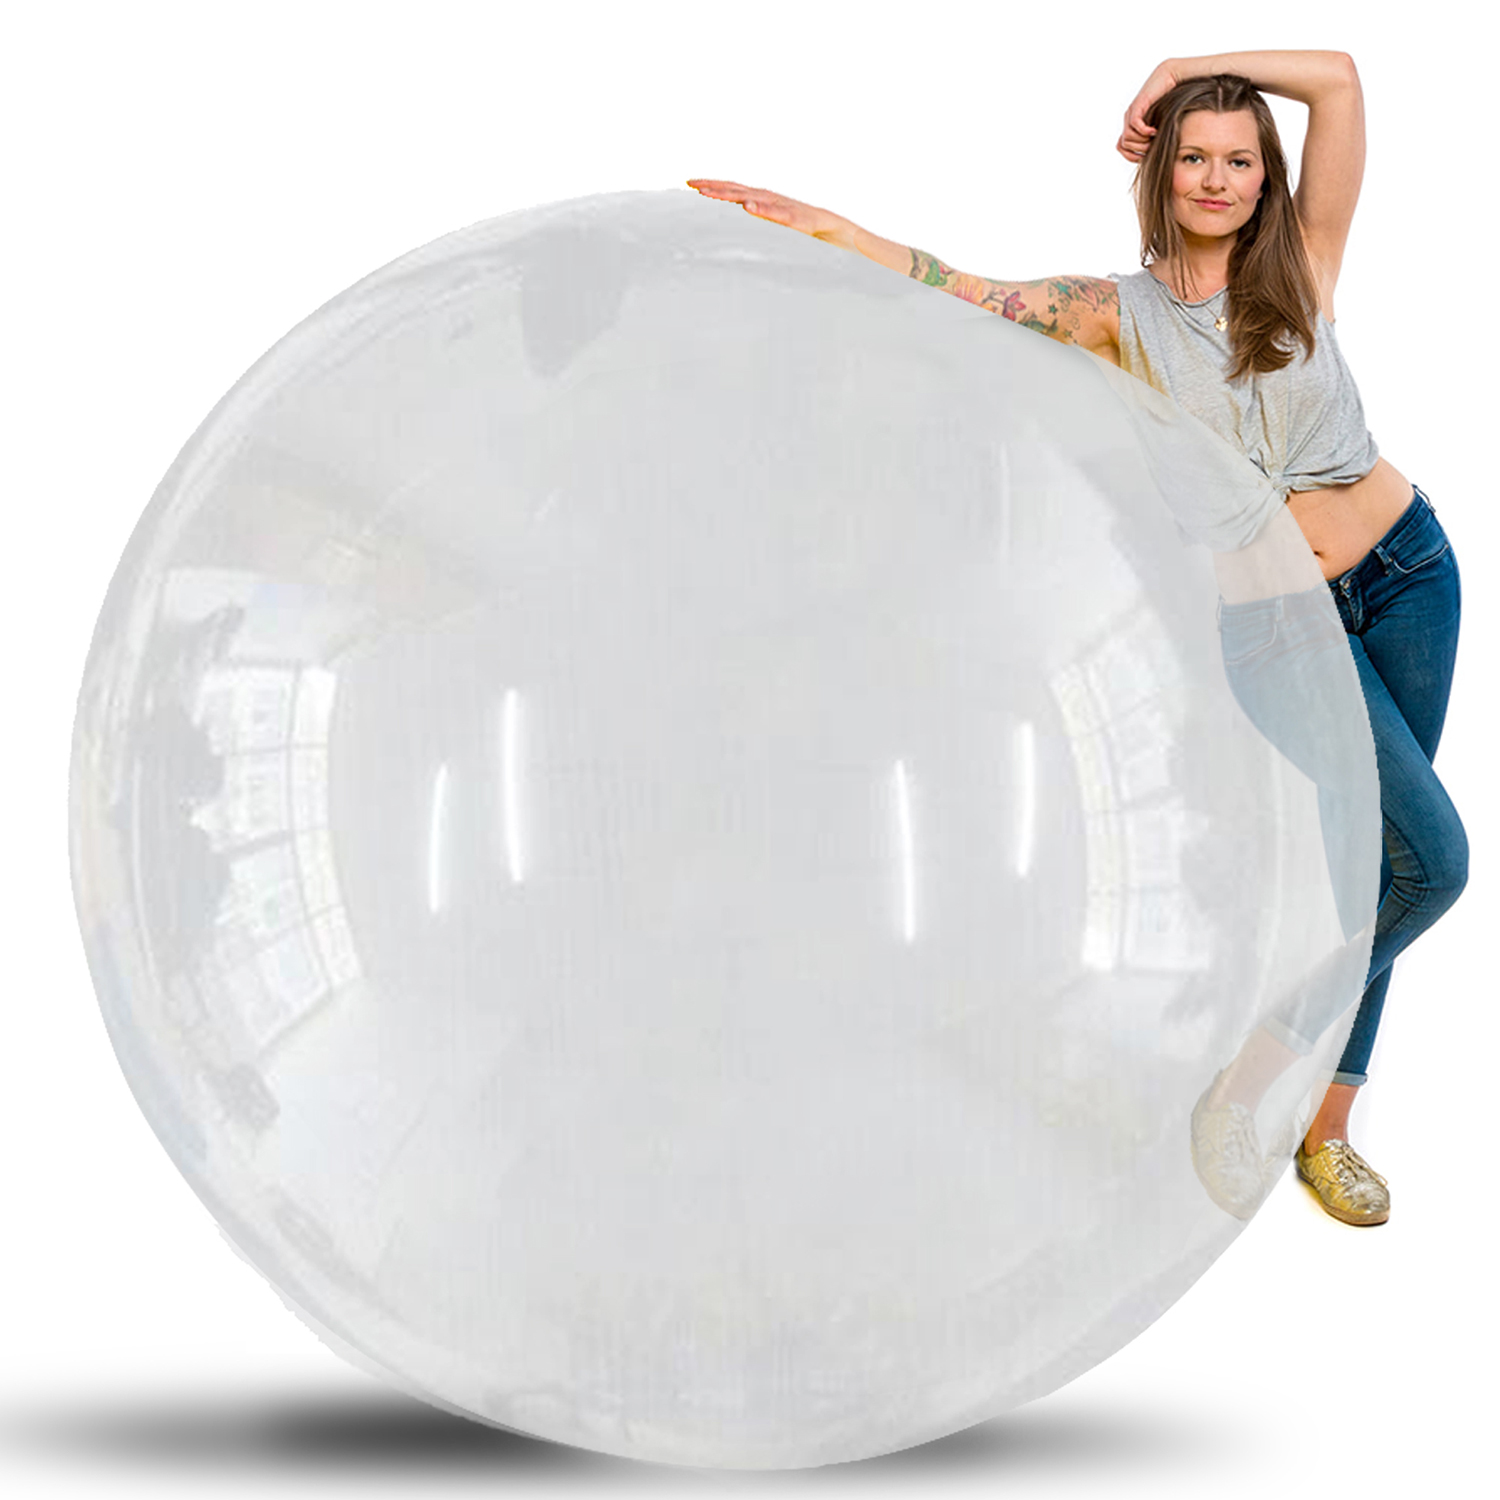 Karenhi 4 globos gigantes de 72 pulgadas, globos redondos grandes de látex,  globos gigantes, globos resistentes, bola inflable grande para decoración